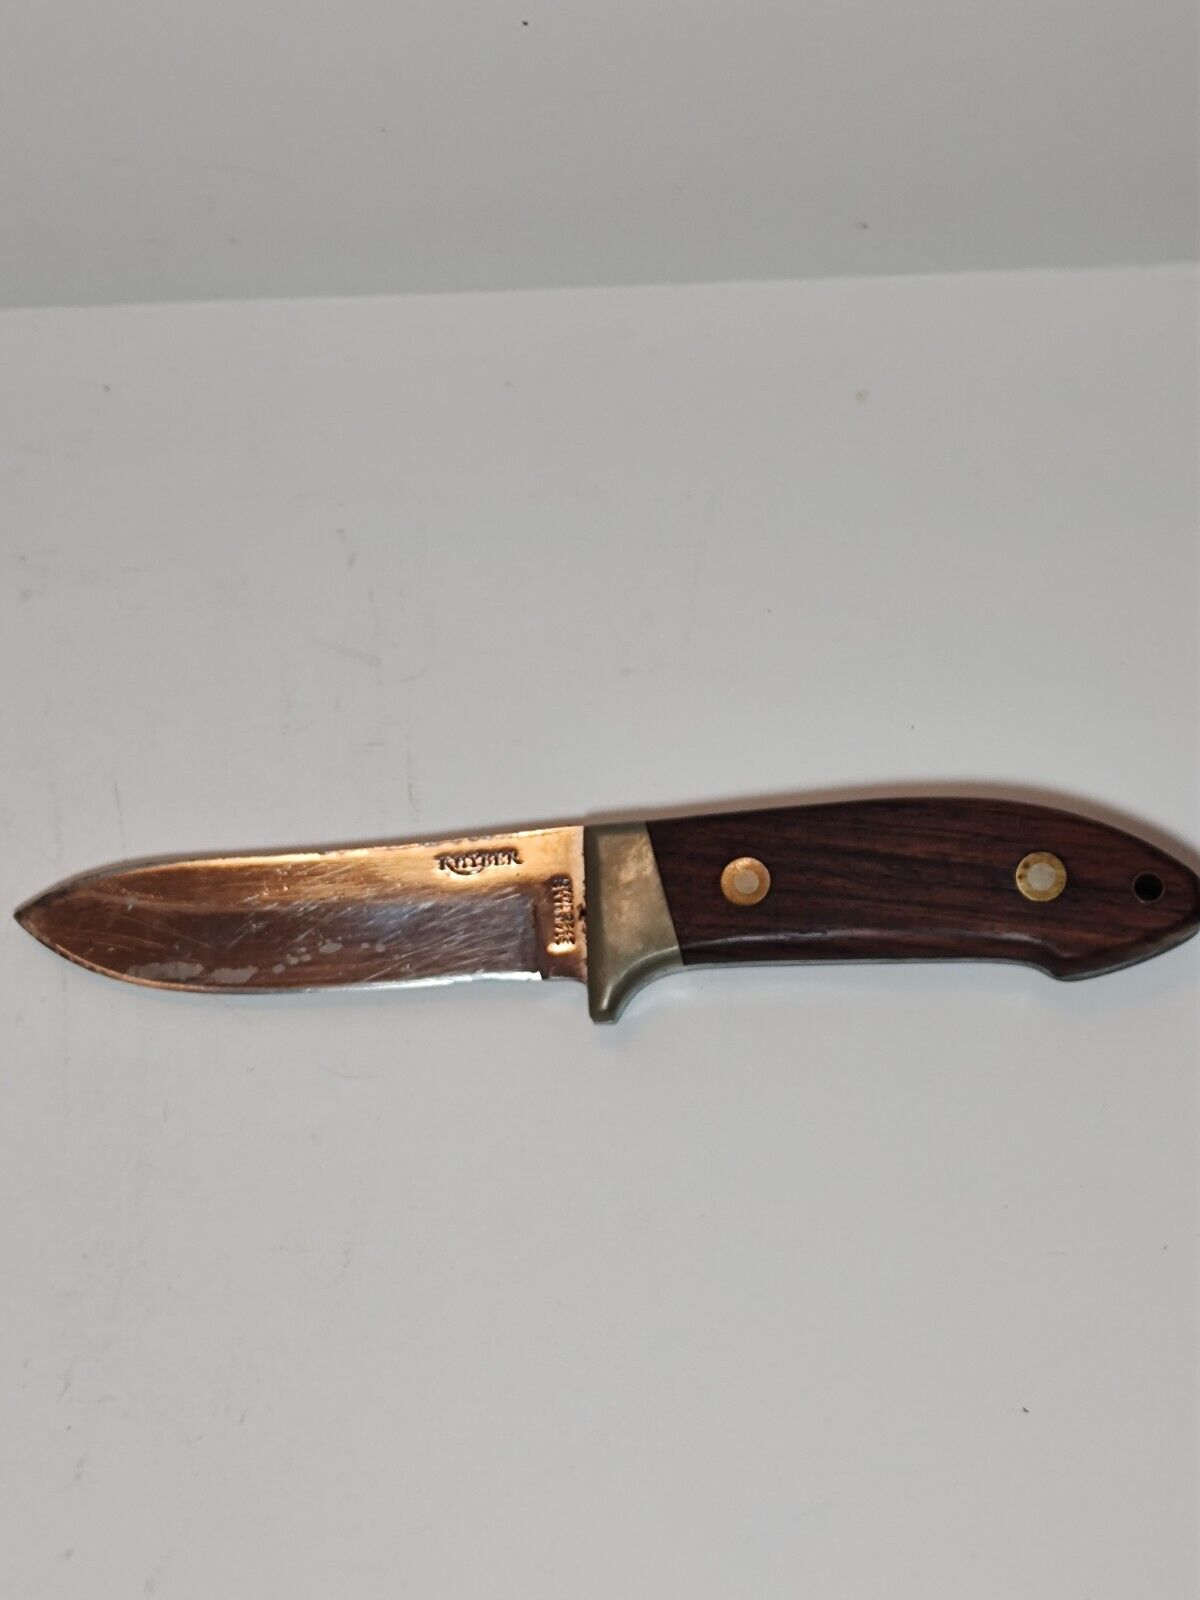 Vintage Khyber Fixed Blade Knife 2720 (Japan)